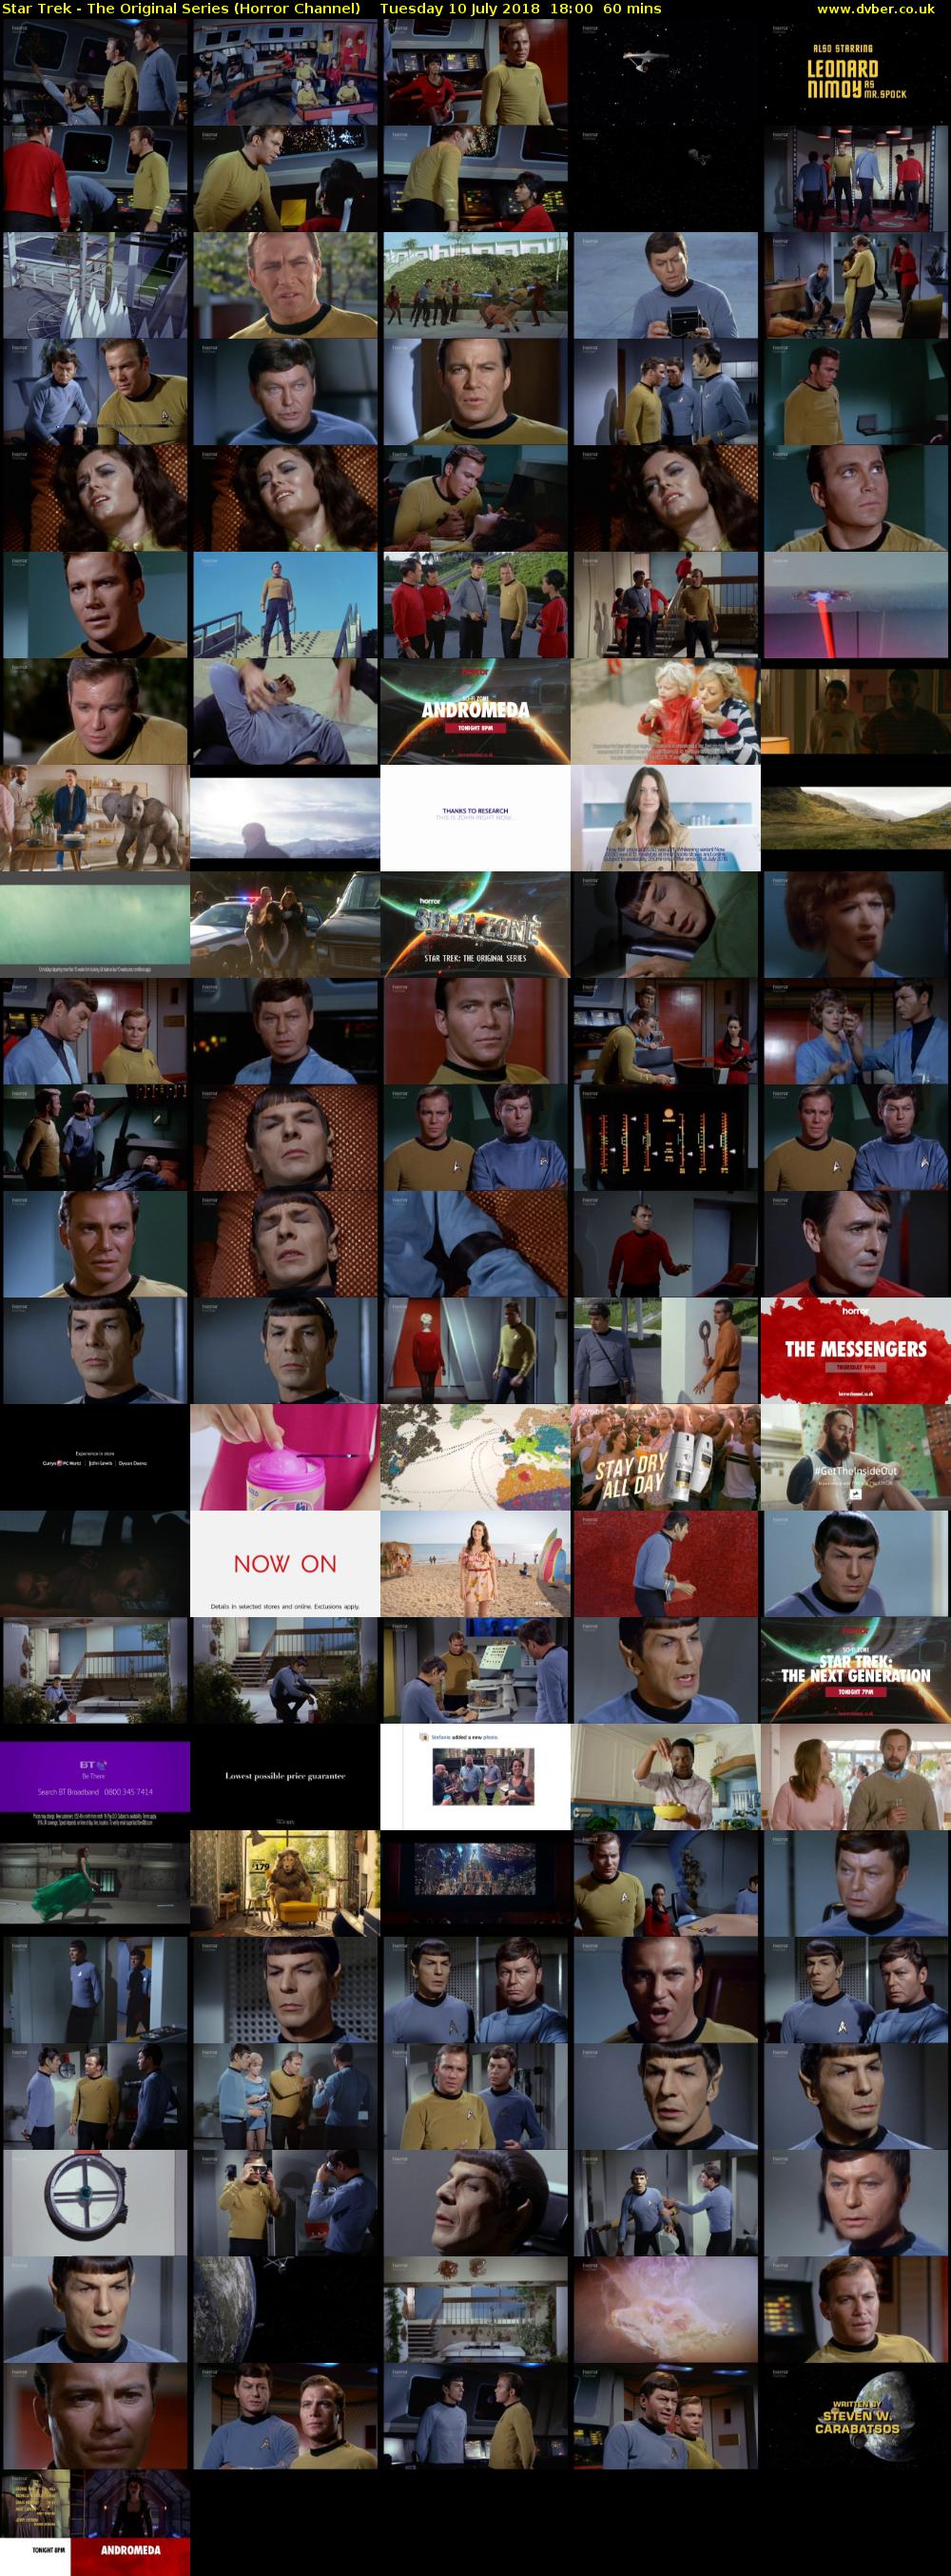 Star Trek - The Original Series (Horror Channel) Tuesday 10 July 2018 18:00 - 19:00